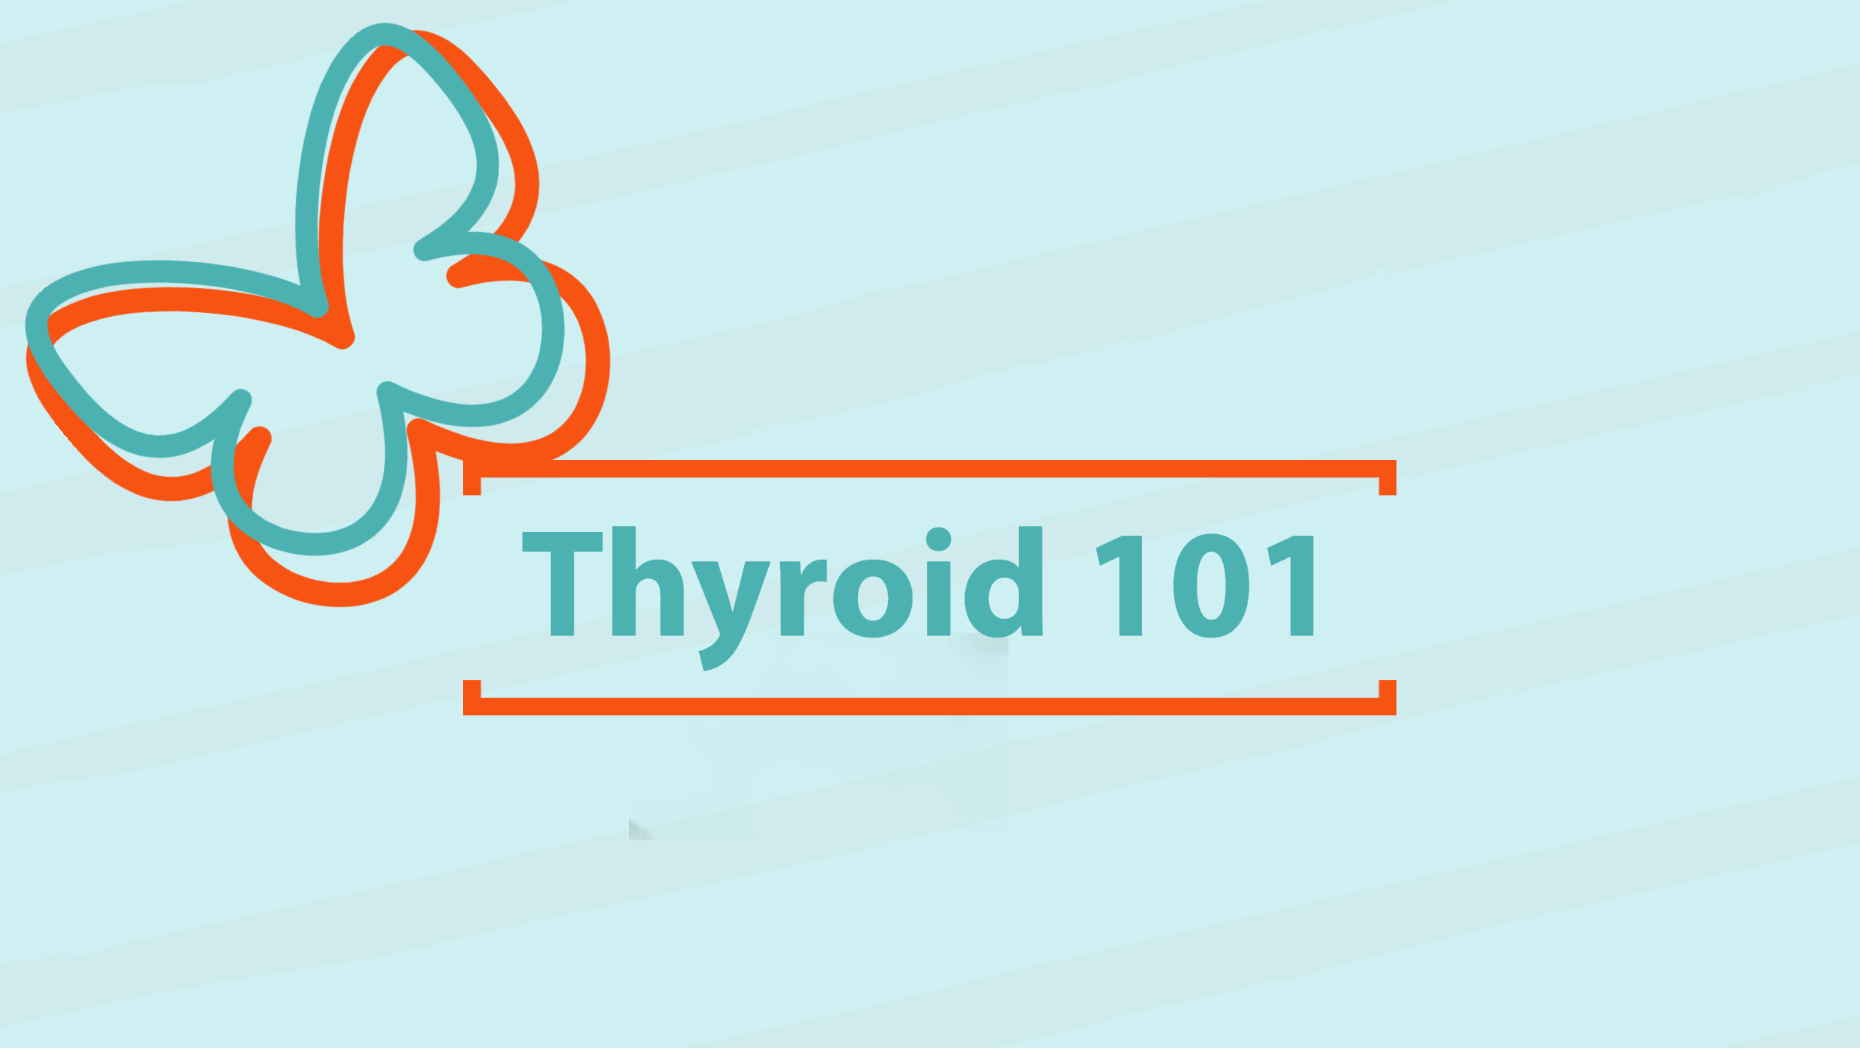 Thyroid 101 image